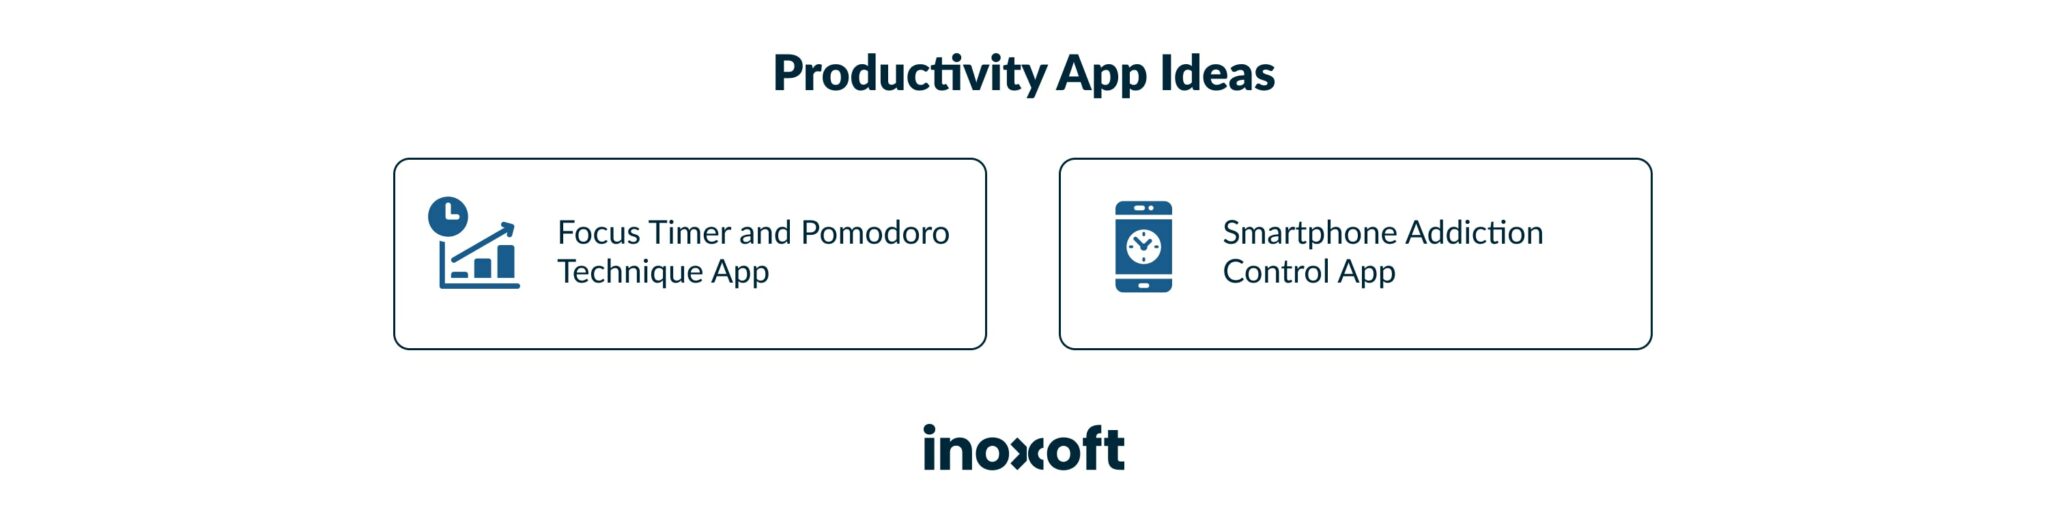 Productivity App Ideas